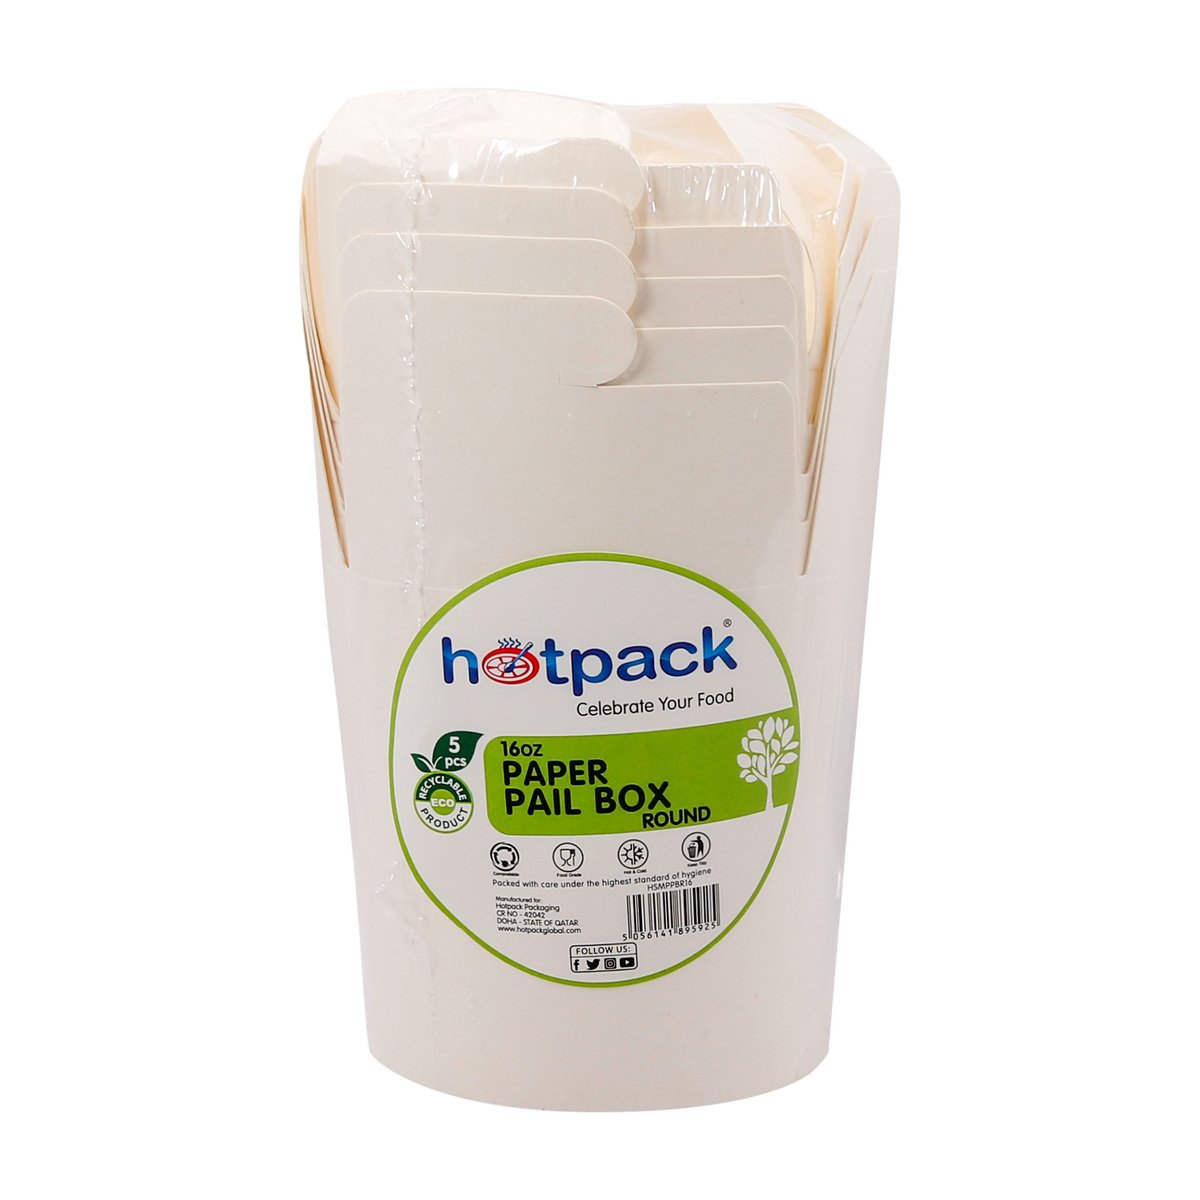 Hotpack Paper Pail Box Round 16oz 5pcs